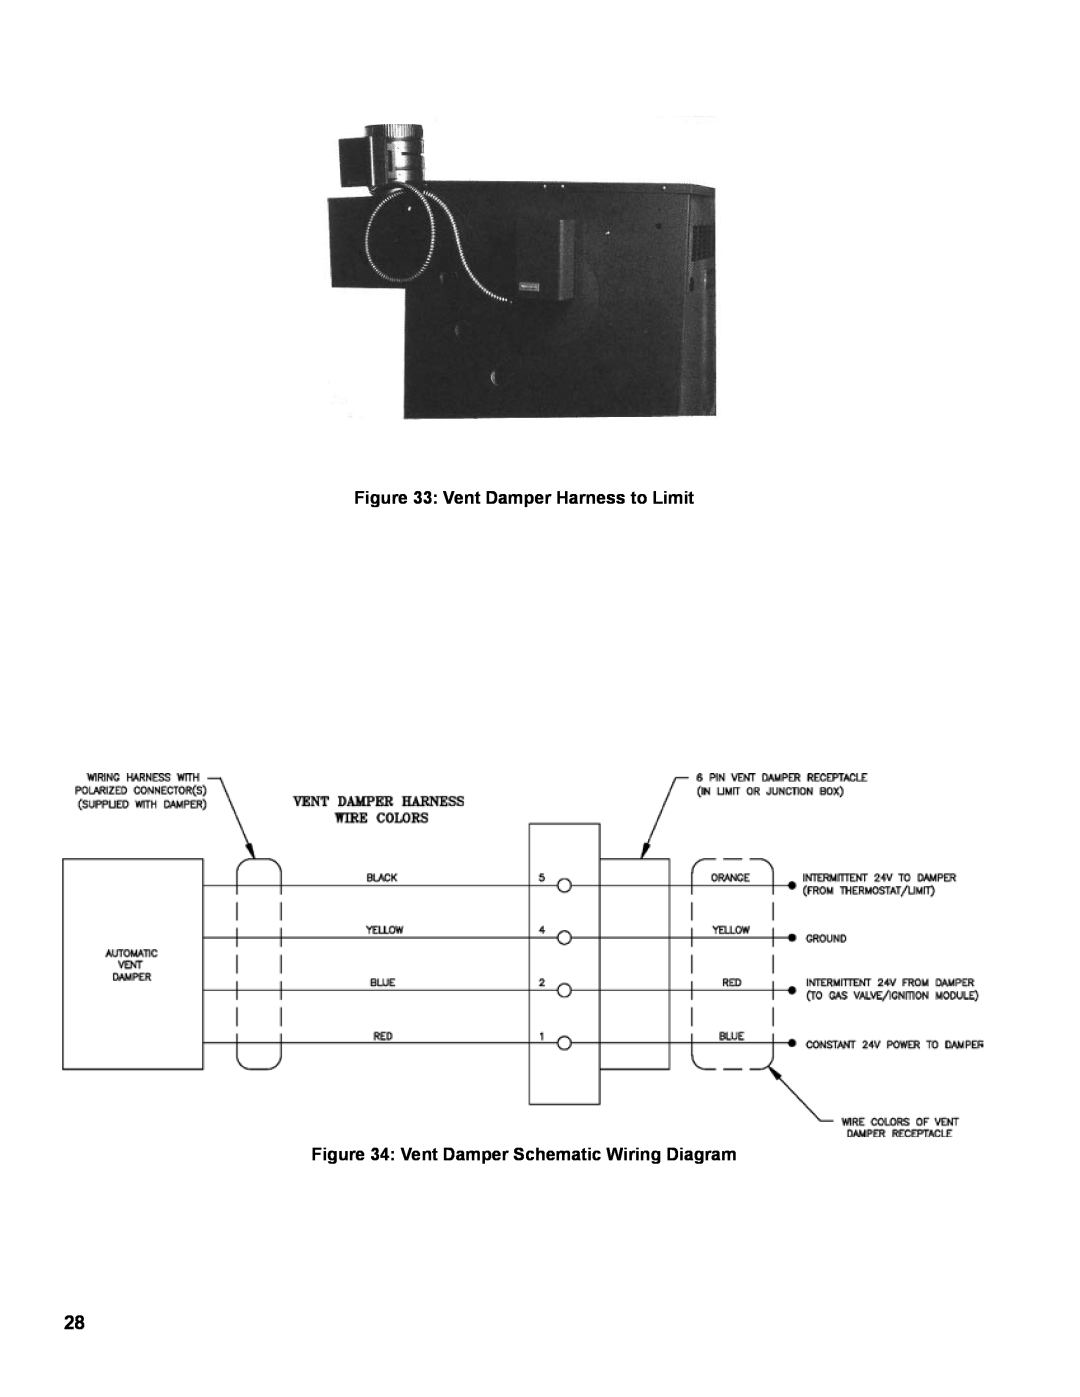 Burnham IN10 manual Vent Damper Harness to Limit, Vent Damper Schematic Wiring Diagram 